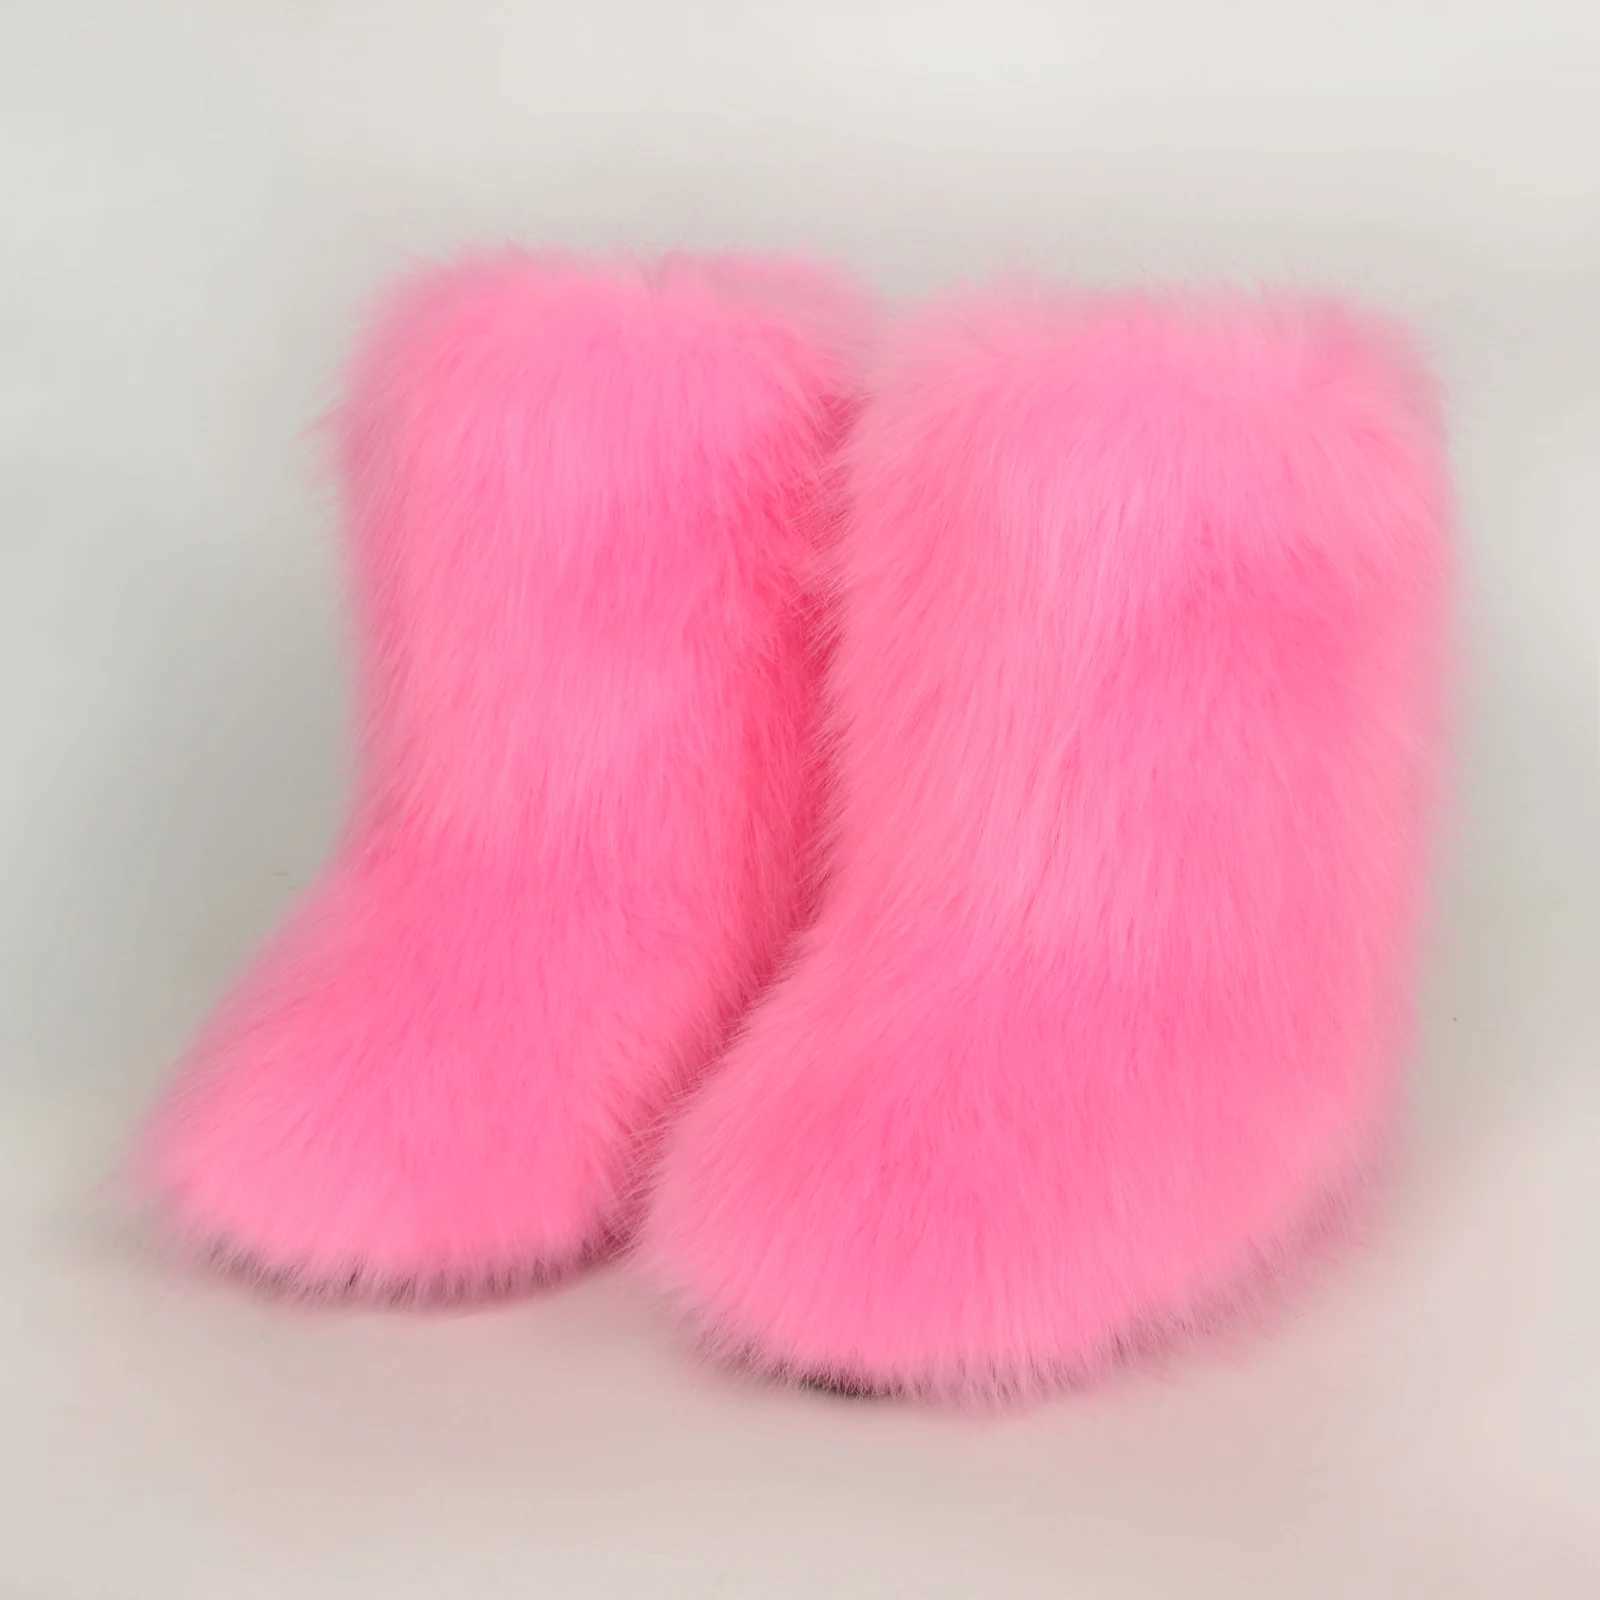 Dame Winter Schuhe Pelz Stiefel Y2k Frauen Fuzzy Stiefel Flauschigen Pelzigen Faux Pelz Schnee Stiefel Plüsch Warme Bottes Mode damen Schuhe Schuhe